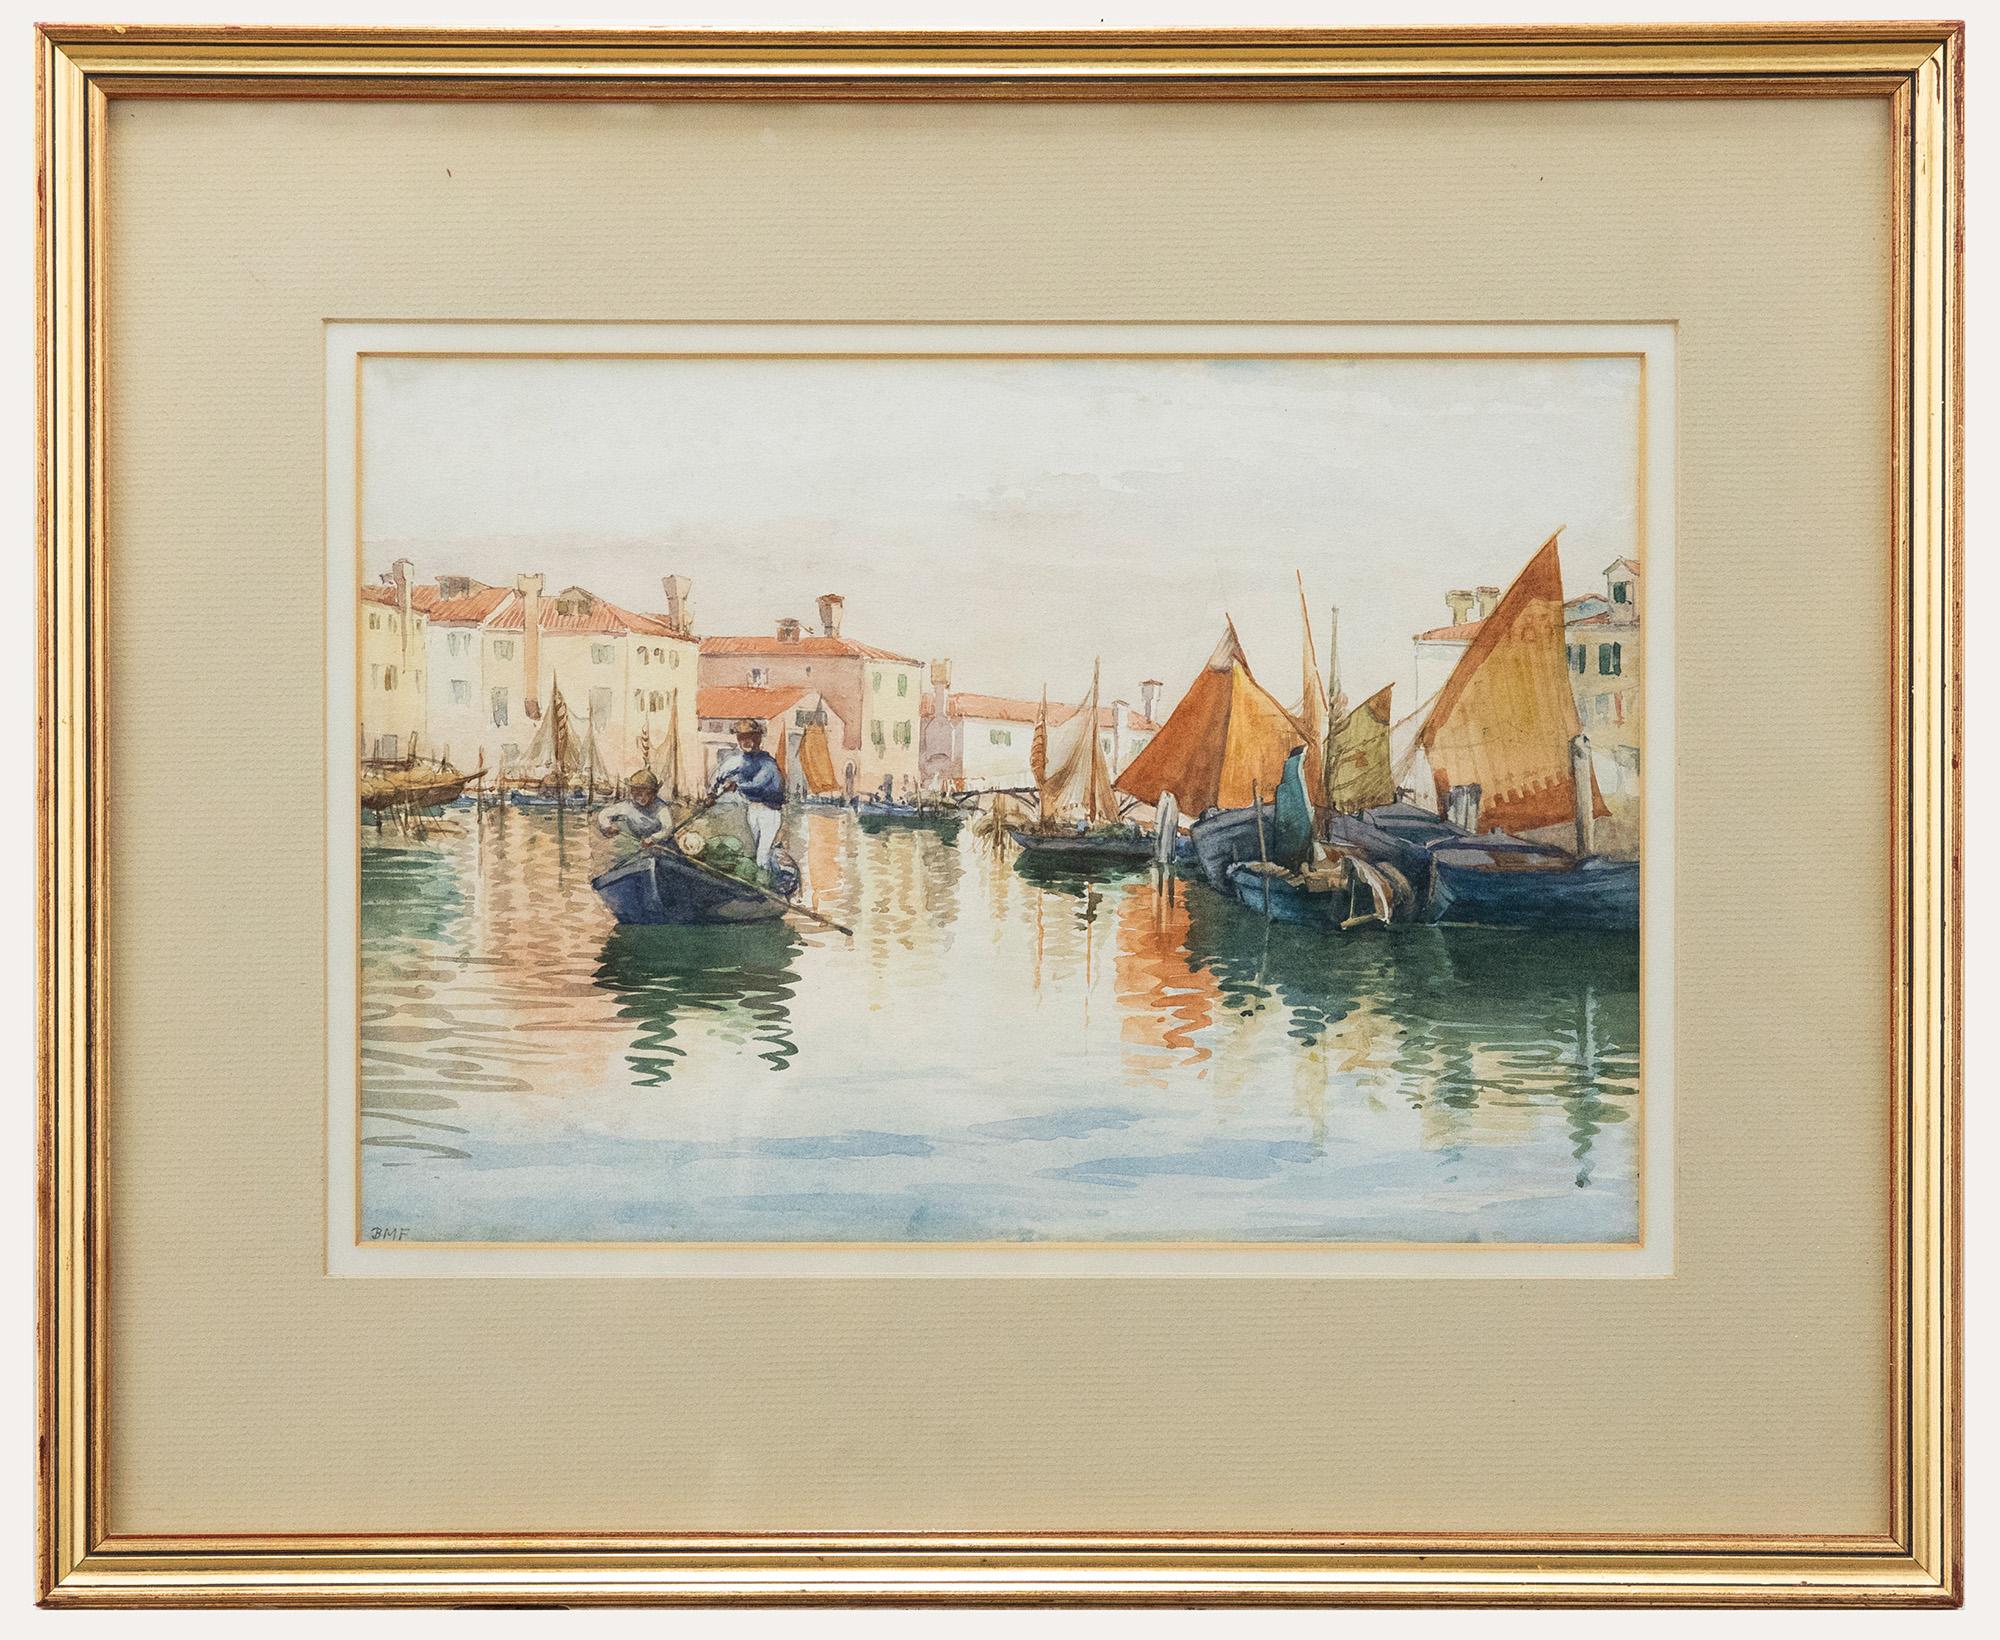 Unknown Landscape Art - B. M. F.  - 20th Century Watercolour, Dusk in Venice